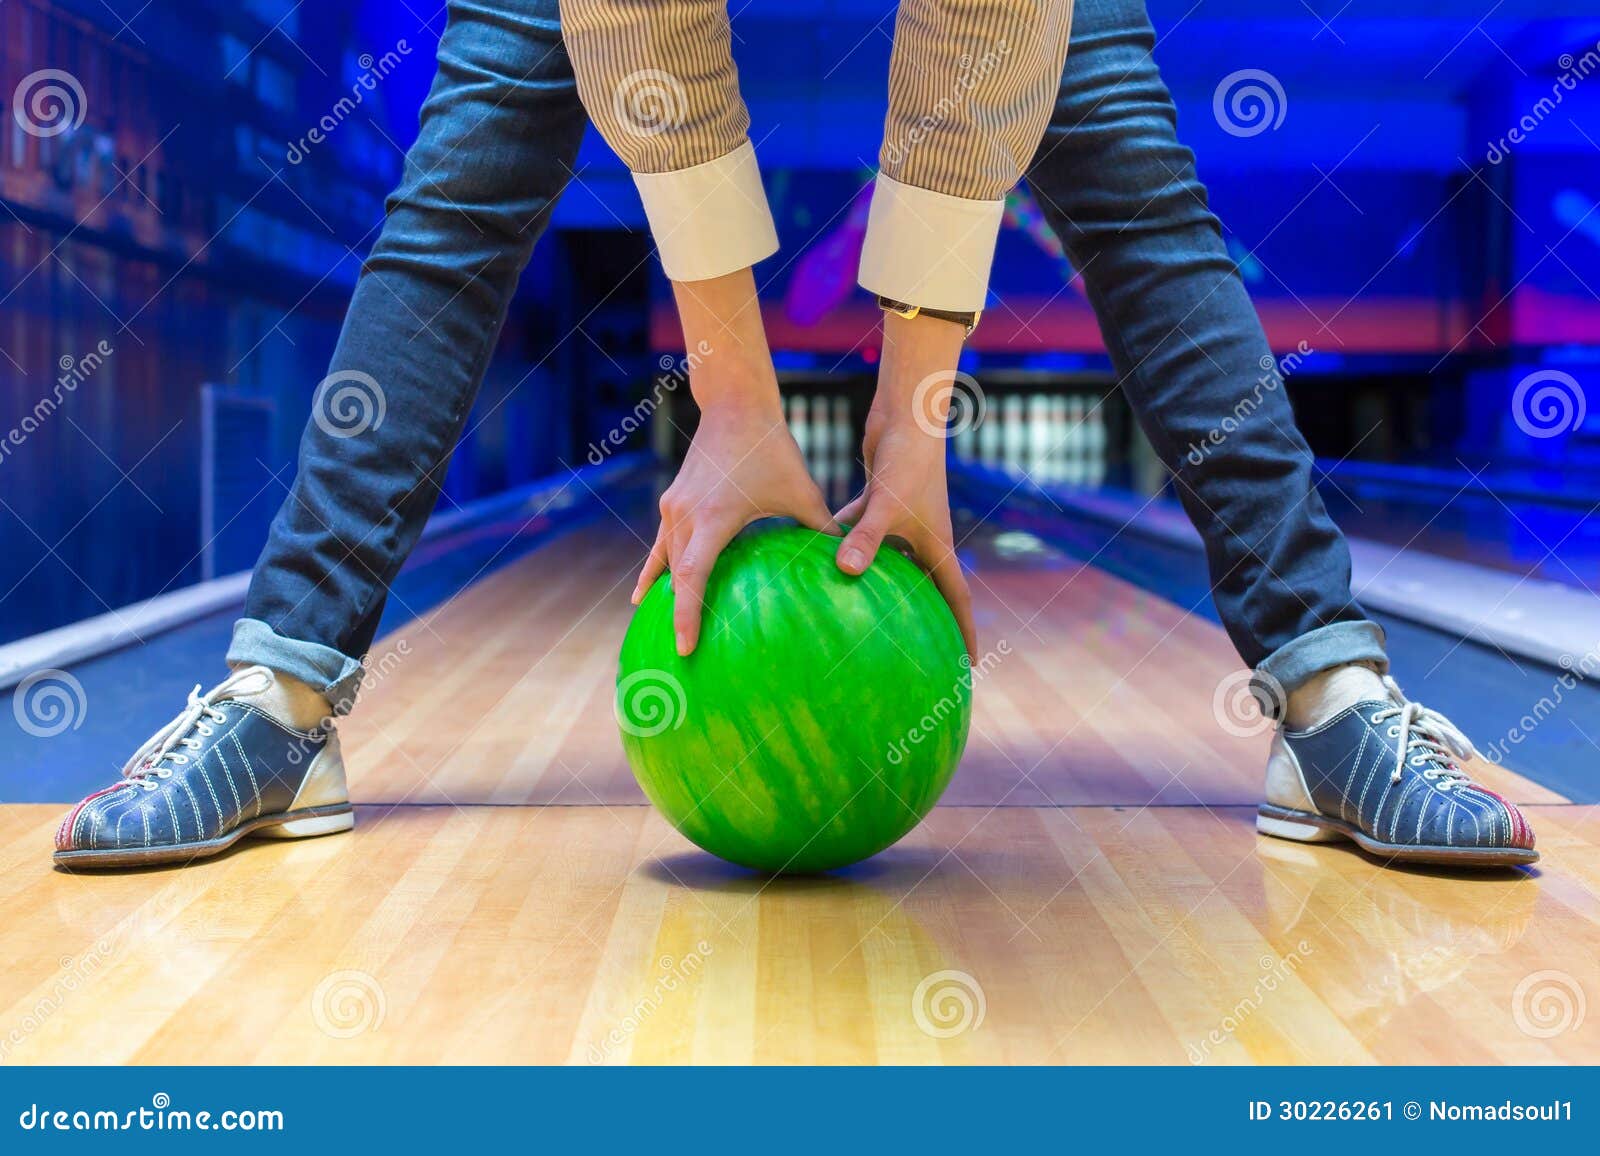 beginner aiming to bowling pins